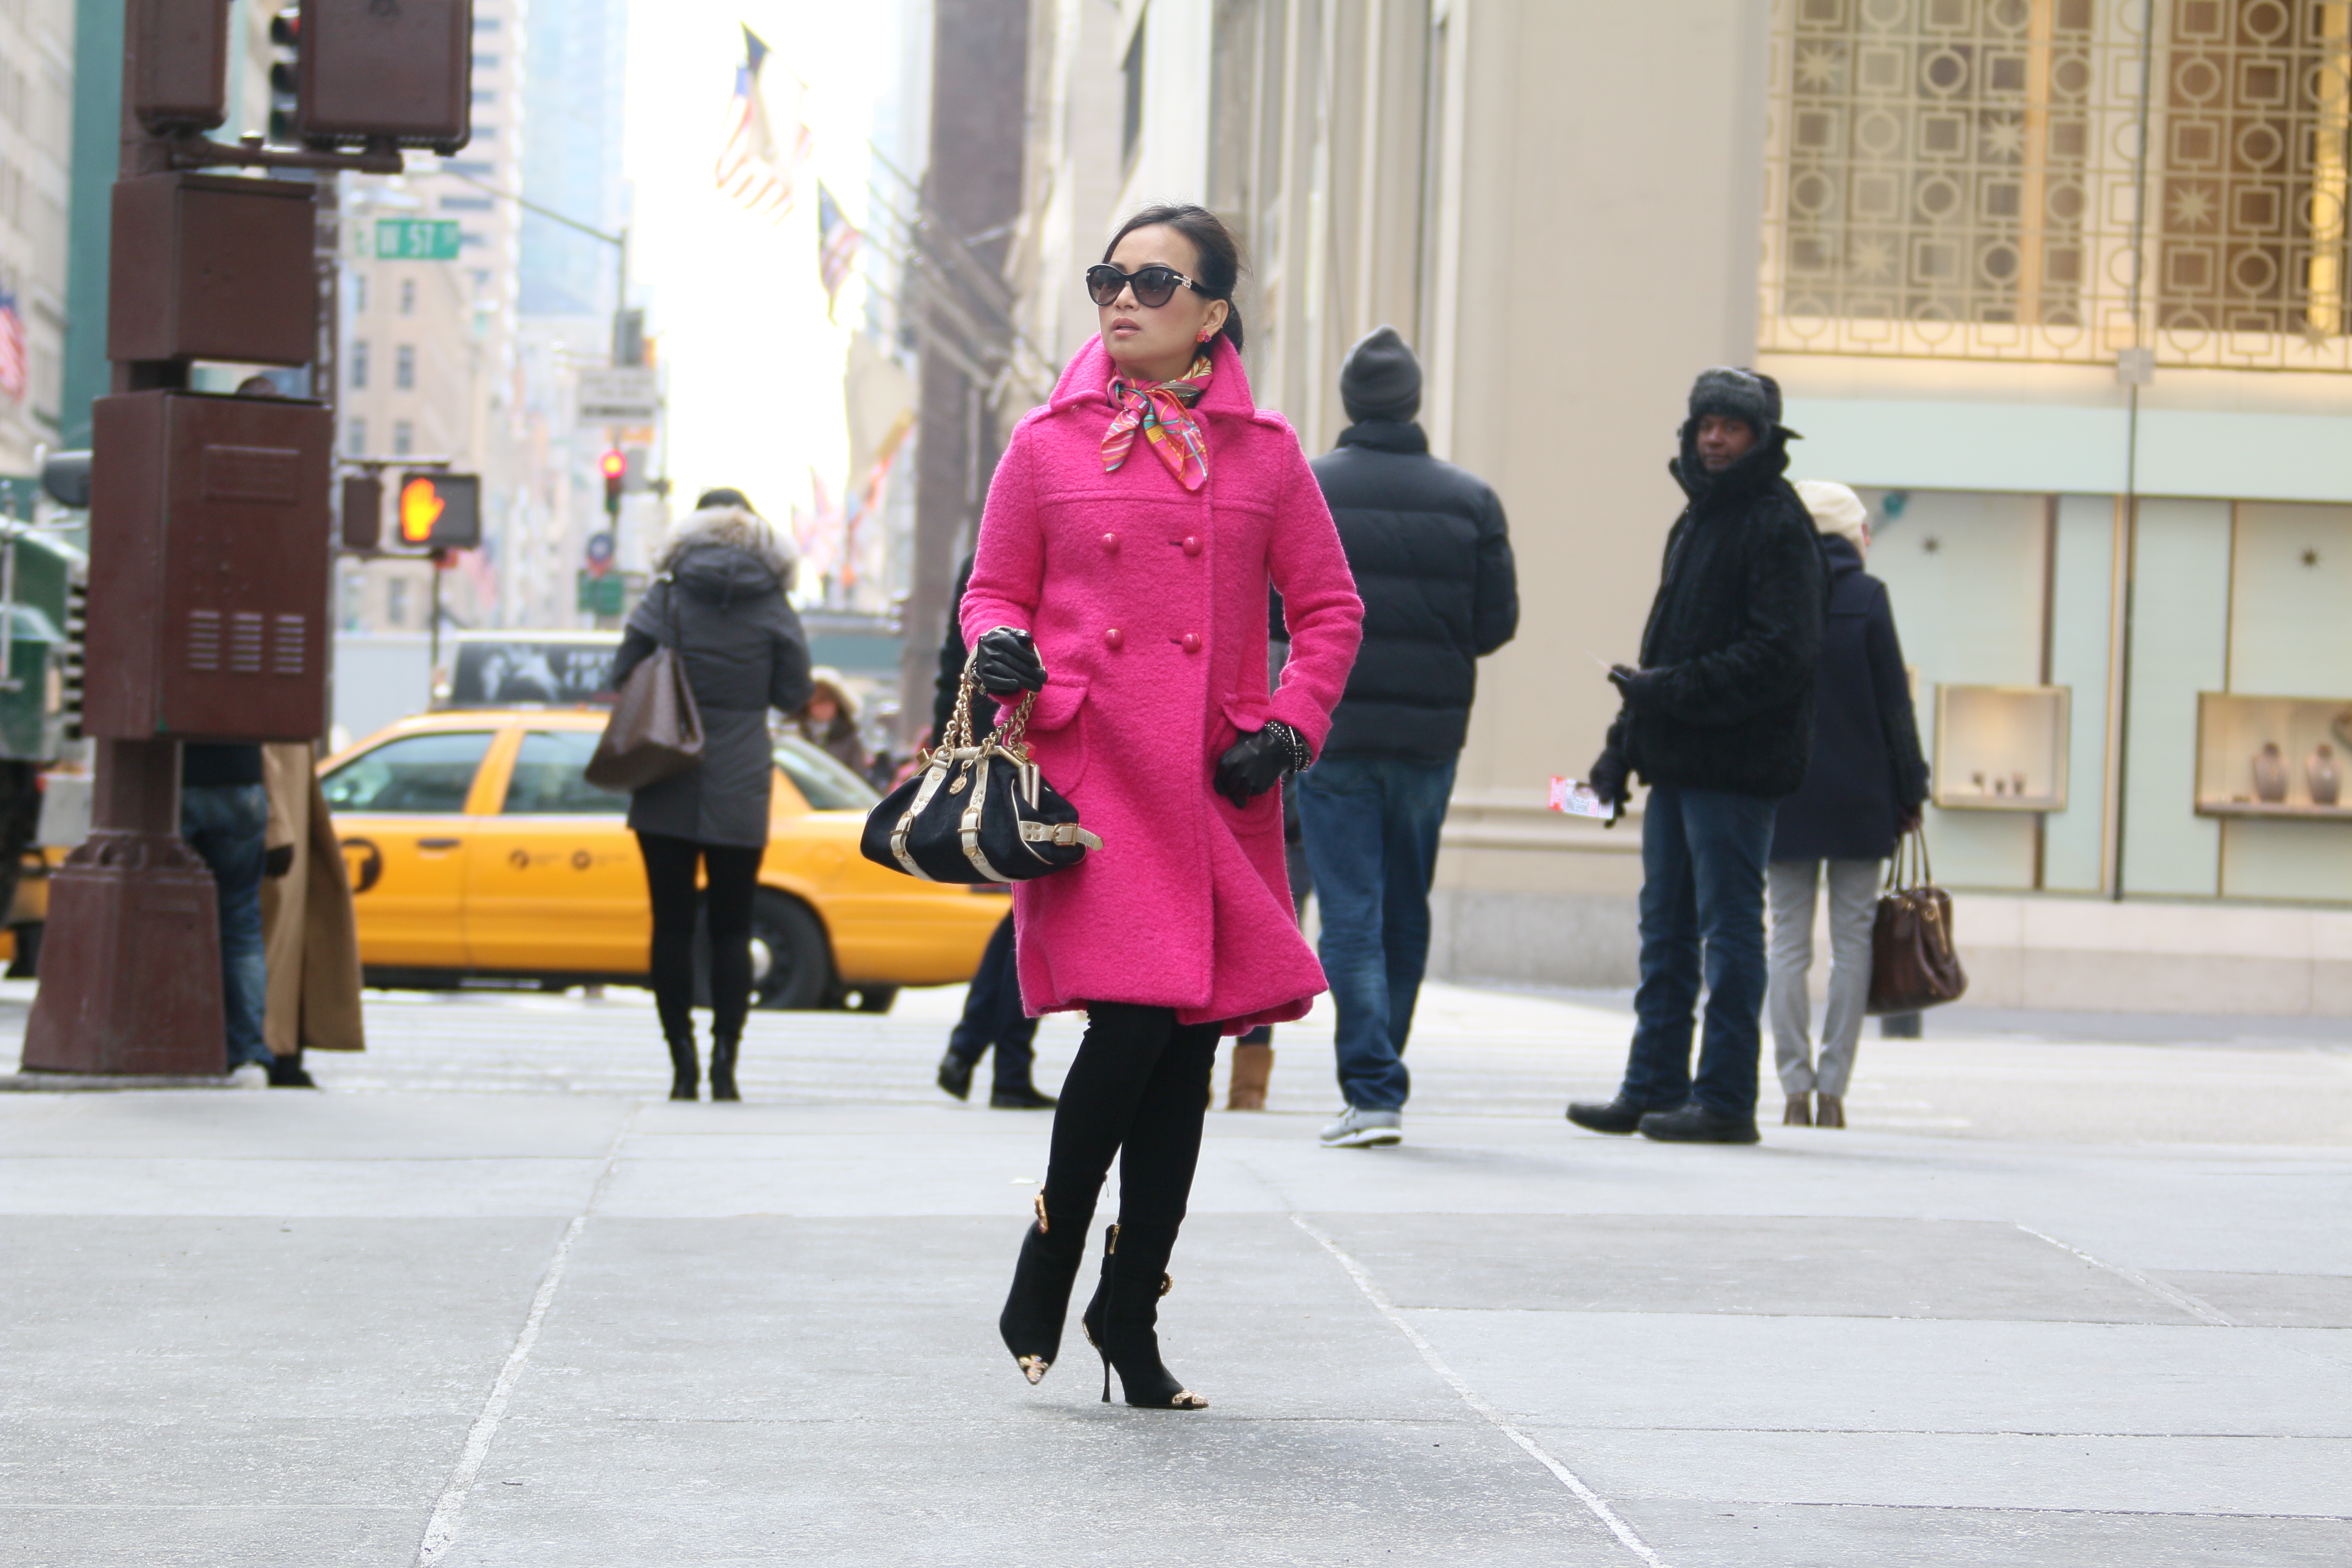 Ha Phuong - Singer Ha Phuong leaves Bergdorf Goodman on Fifth Avenue - Manhattan New York, New York, United States - Friday 20th February 2015 http://www.contactmusic.com/pictures/9c1d2407/ha-phuong-singer-ha-phuong-leaves-bergdorf-goodman_4596978